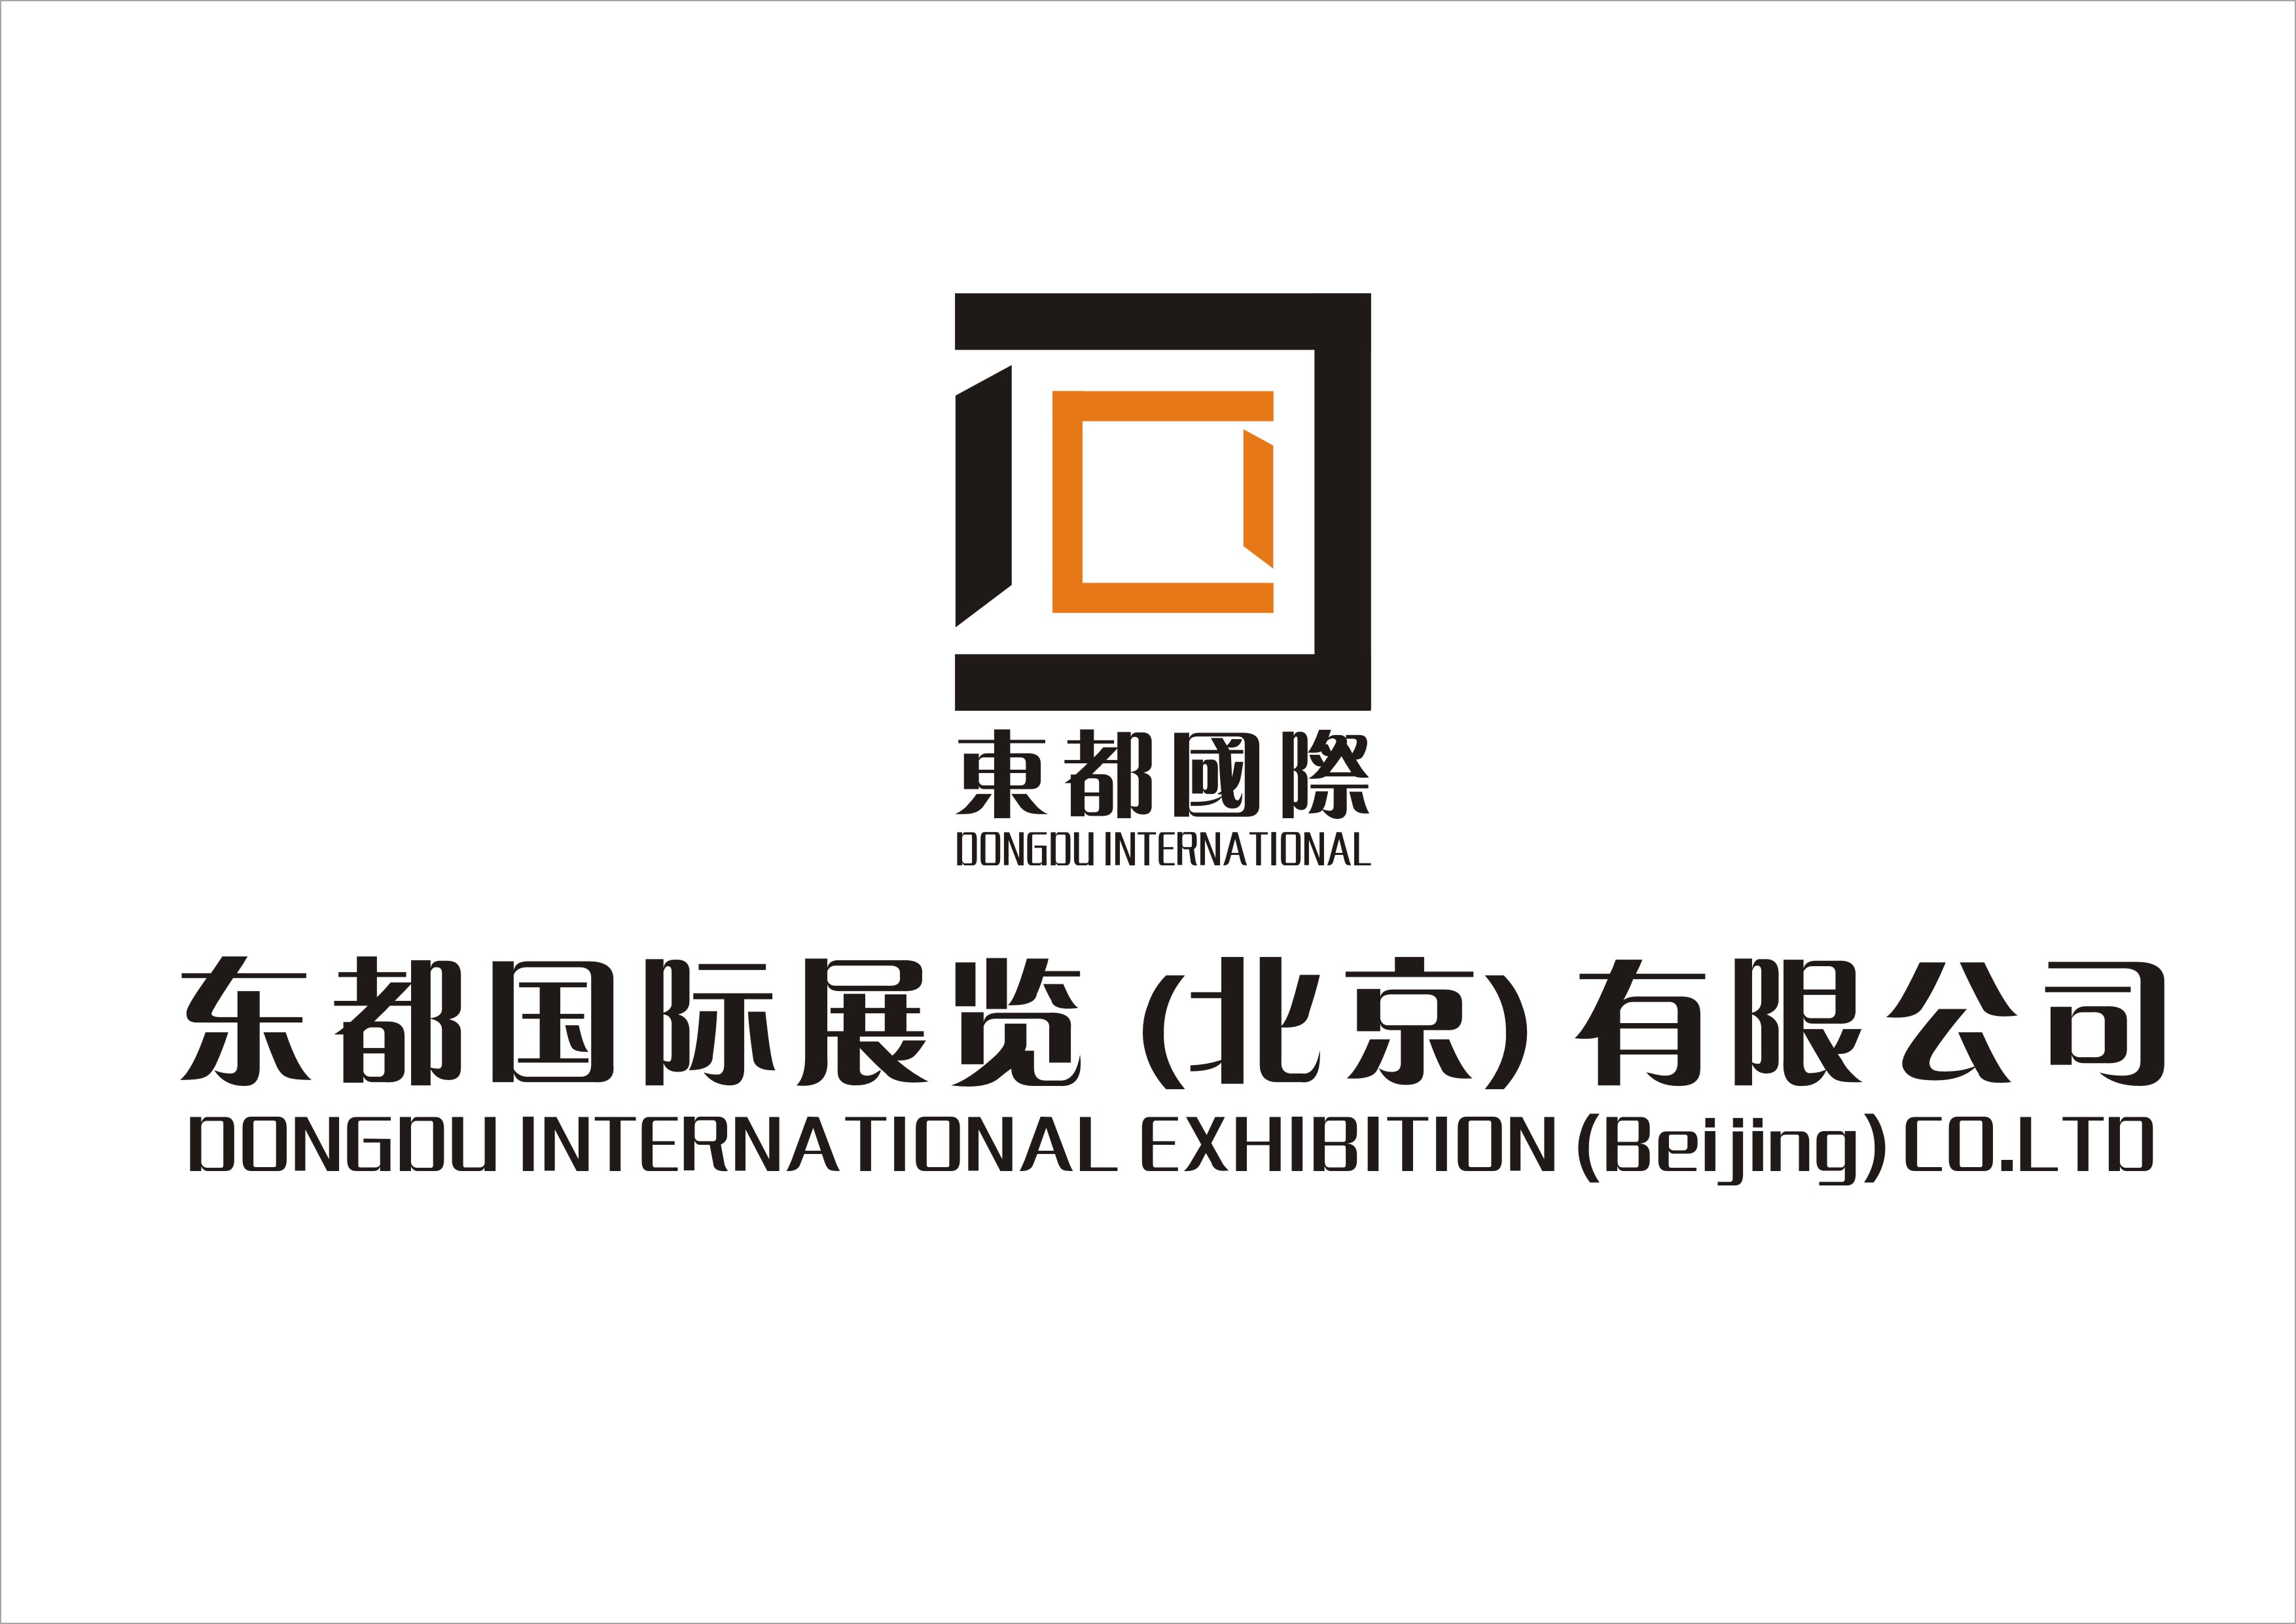 Dongdu International Exhibition (Beijing) Co., Ltd.